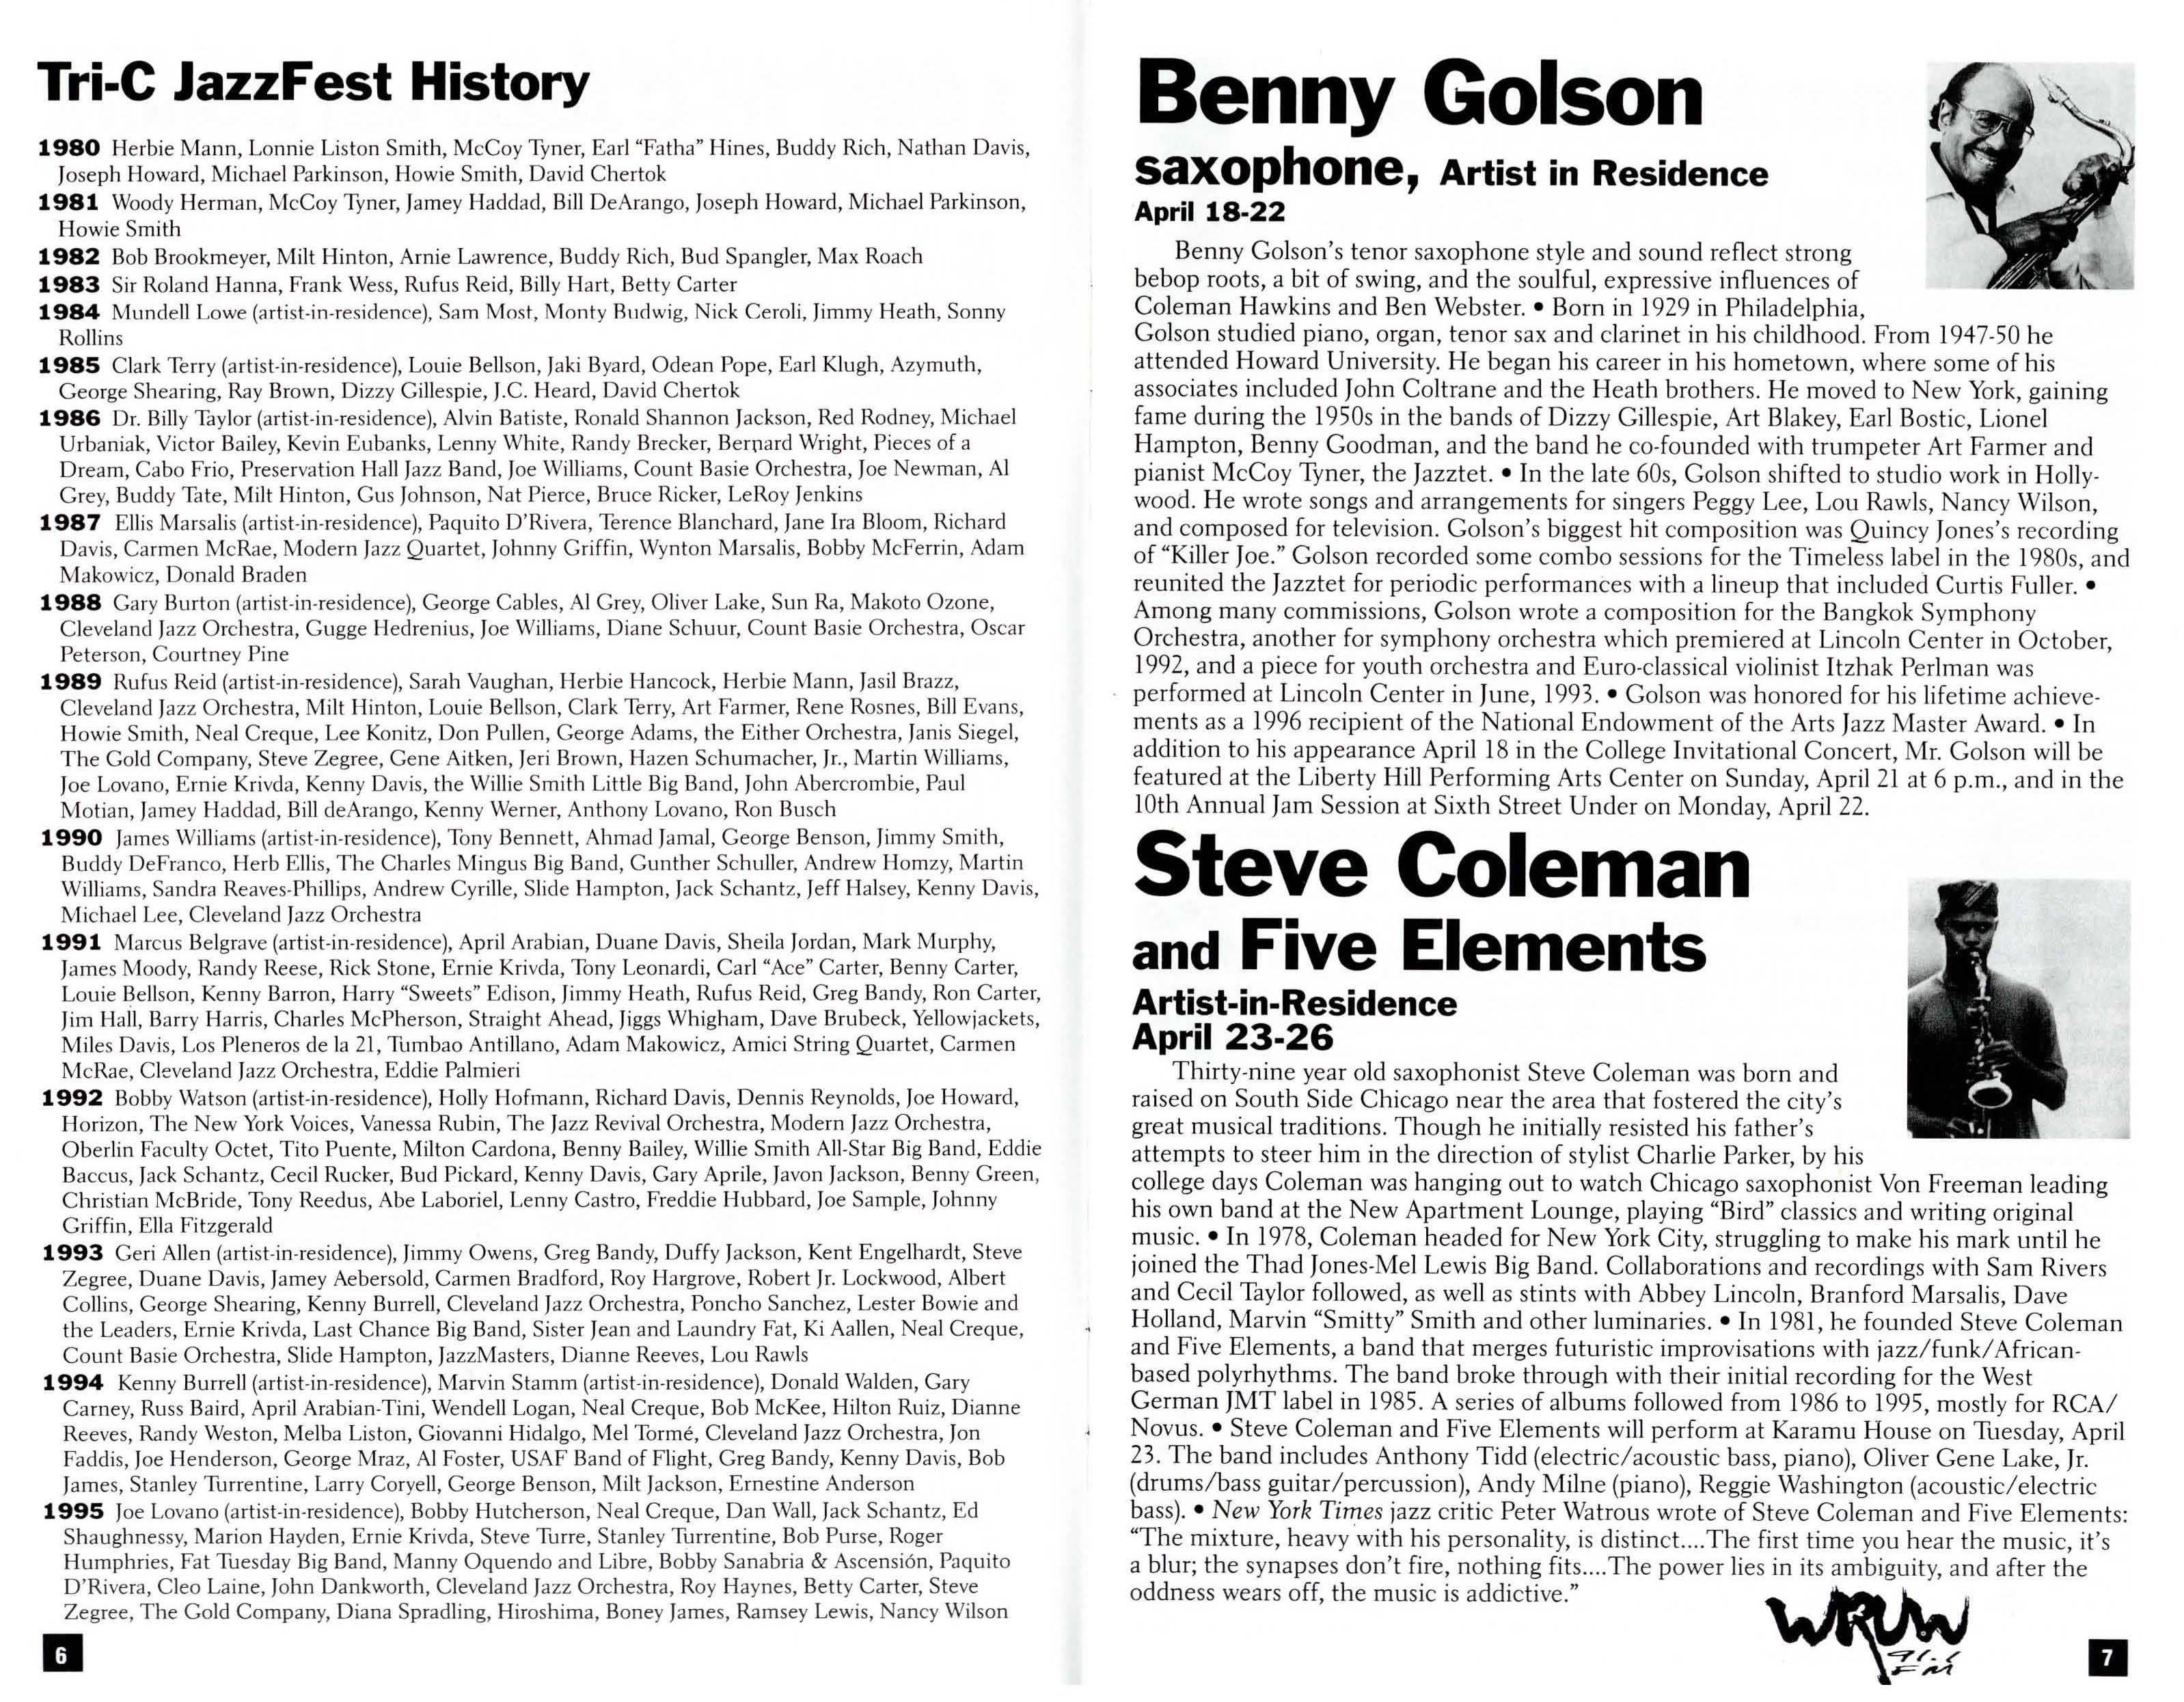 Benny Golson Program Bio